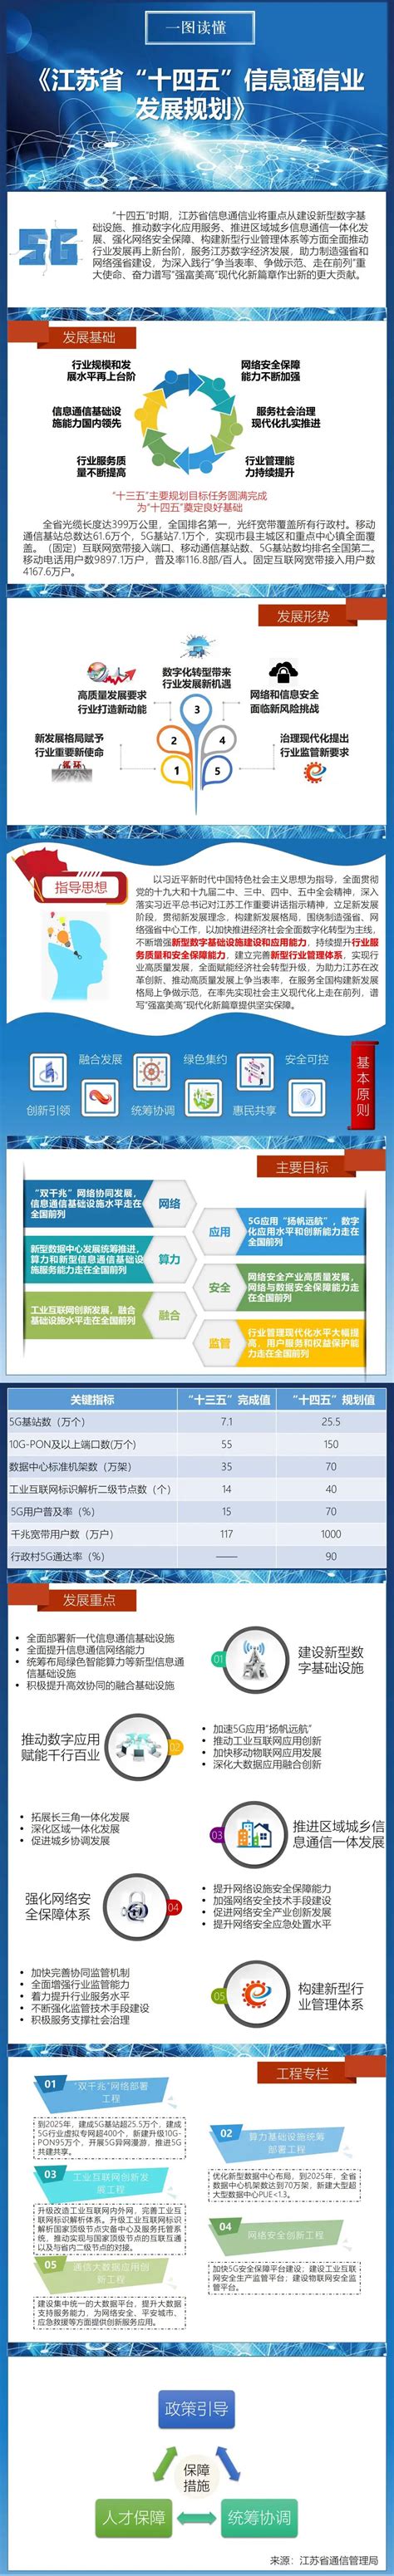 5G用户普及率达到70%，江苏信息通信业“十四五”规划发布 | 江苏网信网